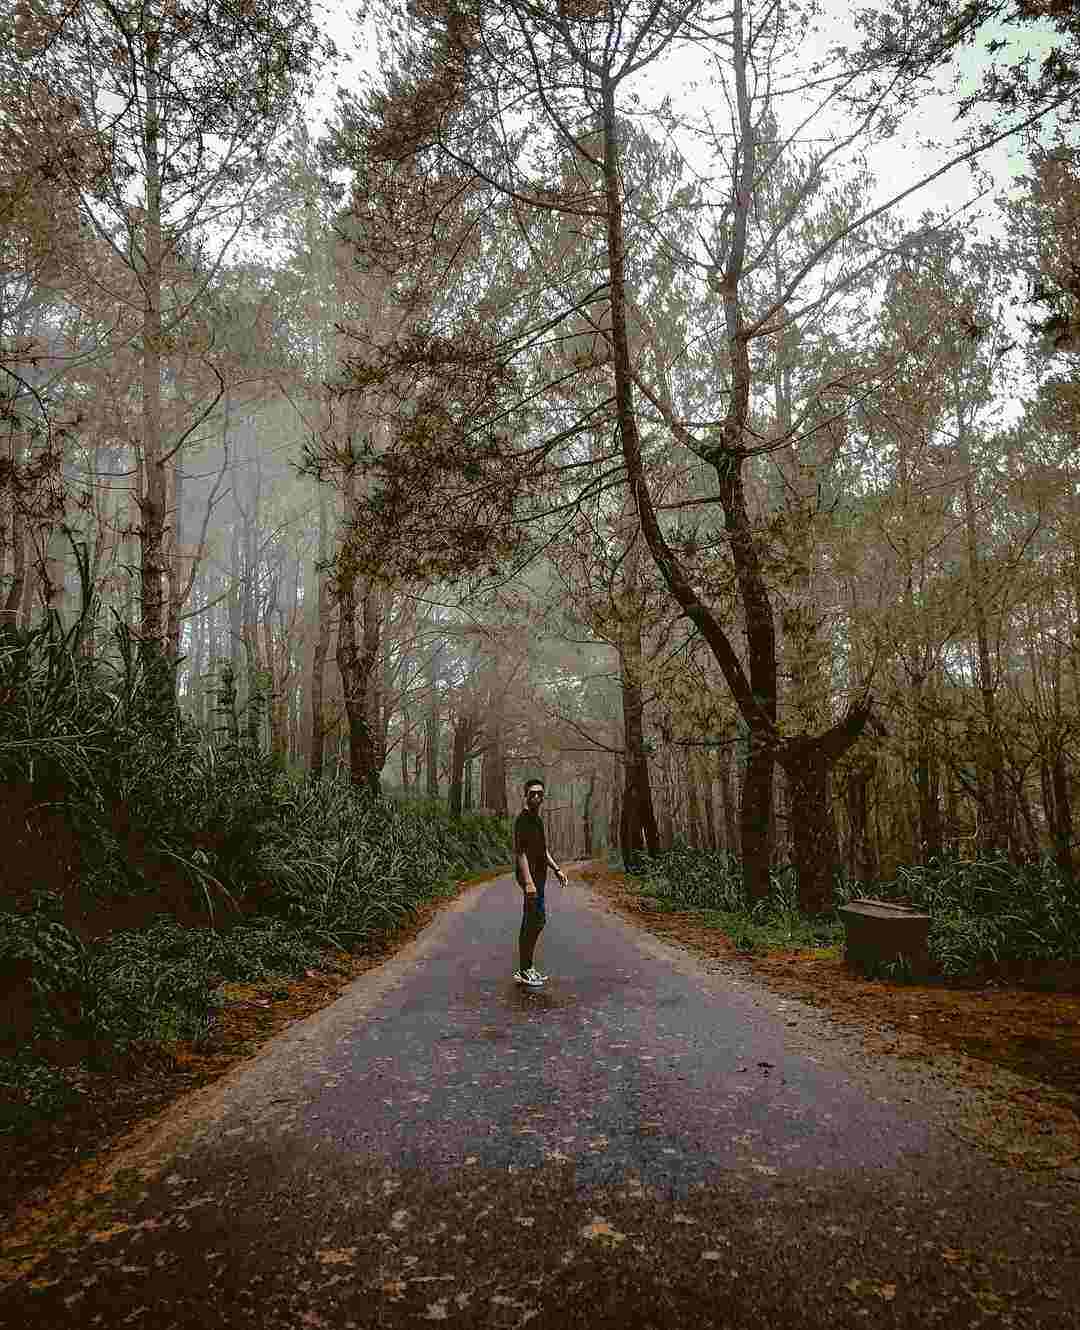 Hutan Pinus Glagahlinggah Lestari via Instagram.com @iamsteve23